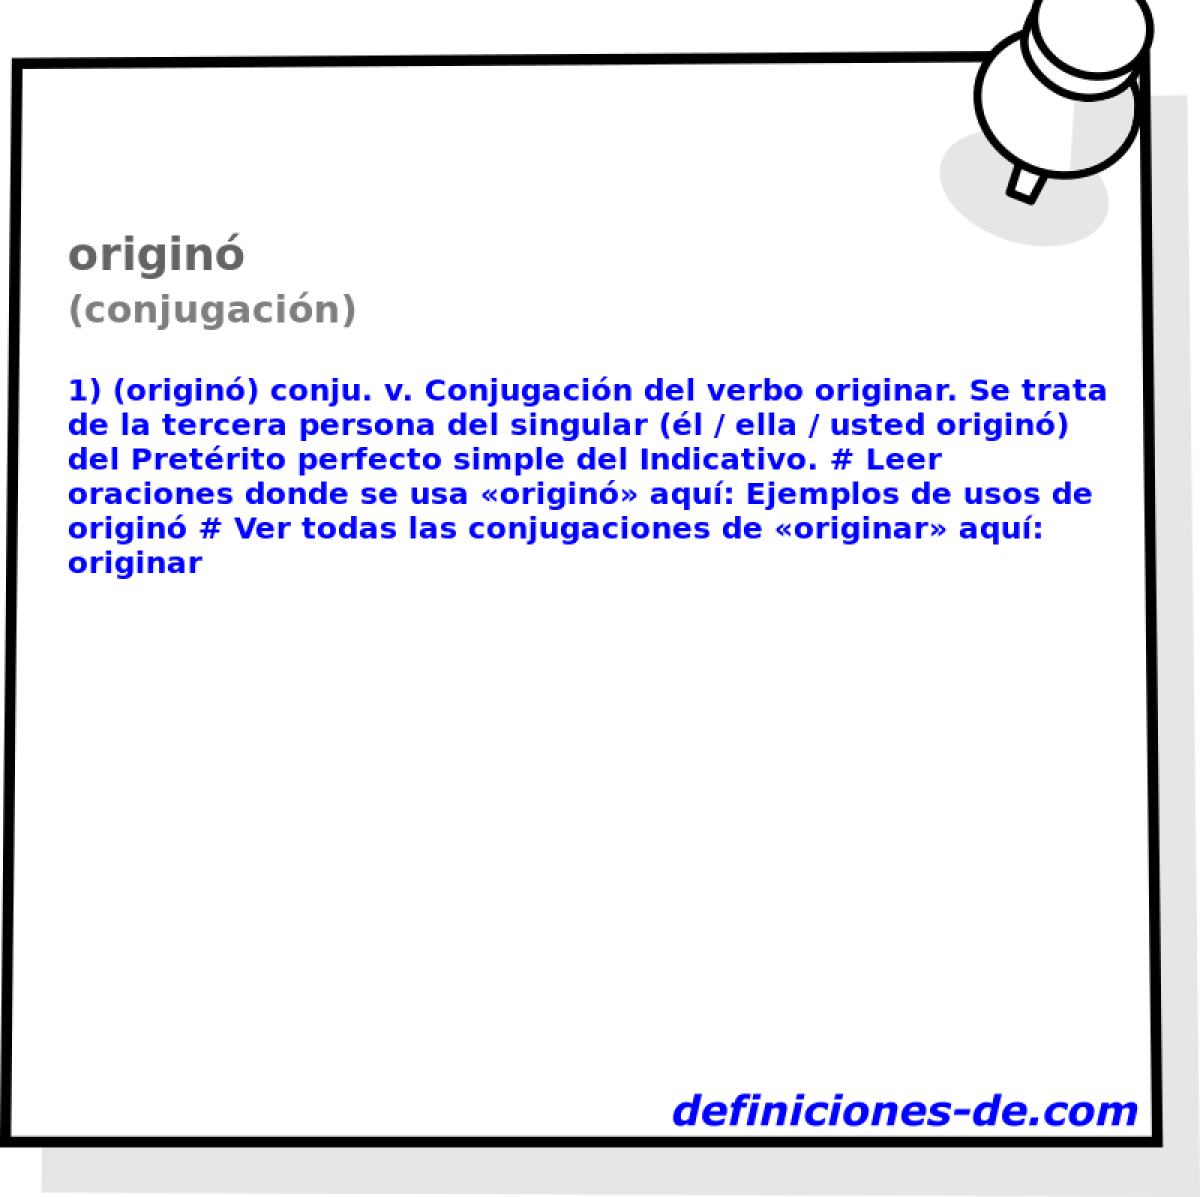 origin (conjugacin)